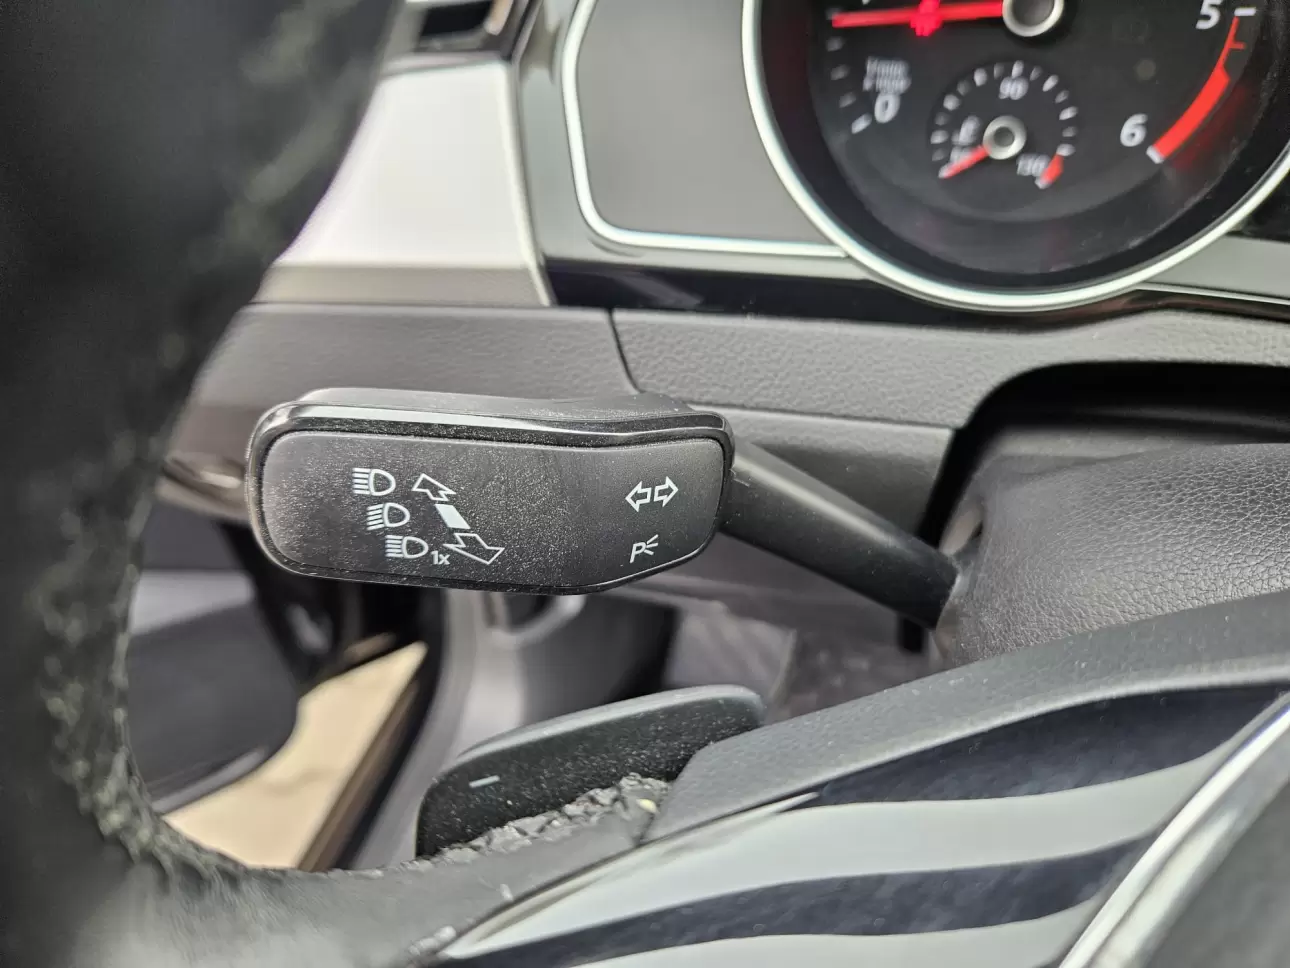 Volkswagen Passat 2.0TDI 4MOTION DSG Sedan 2019